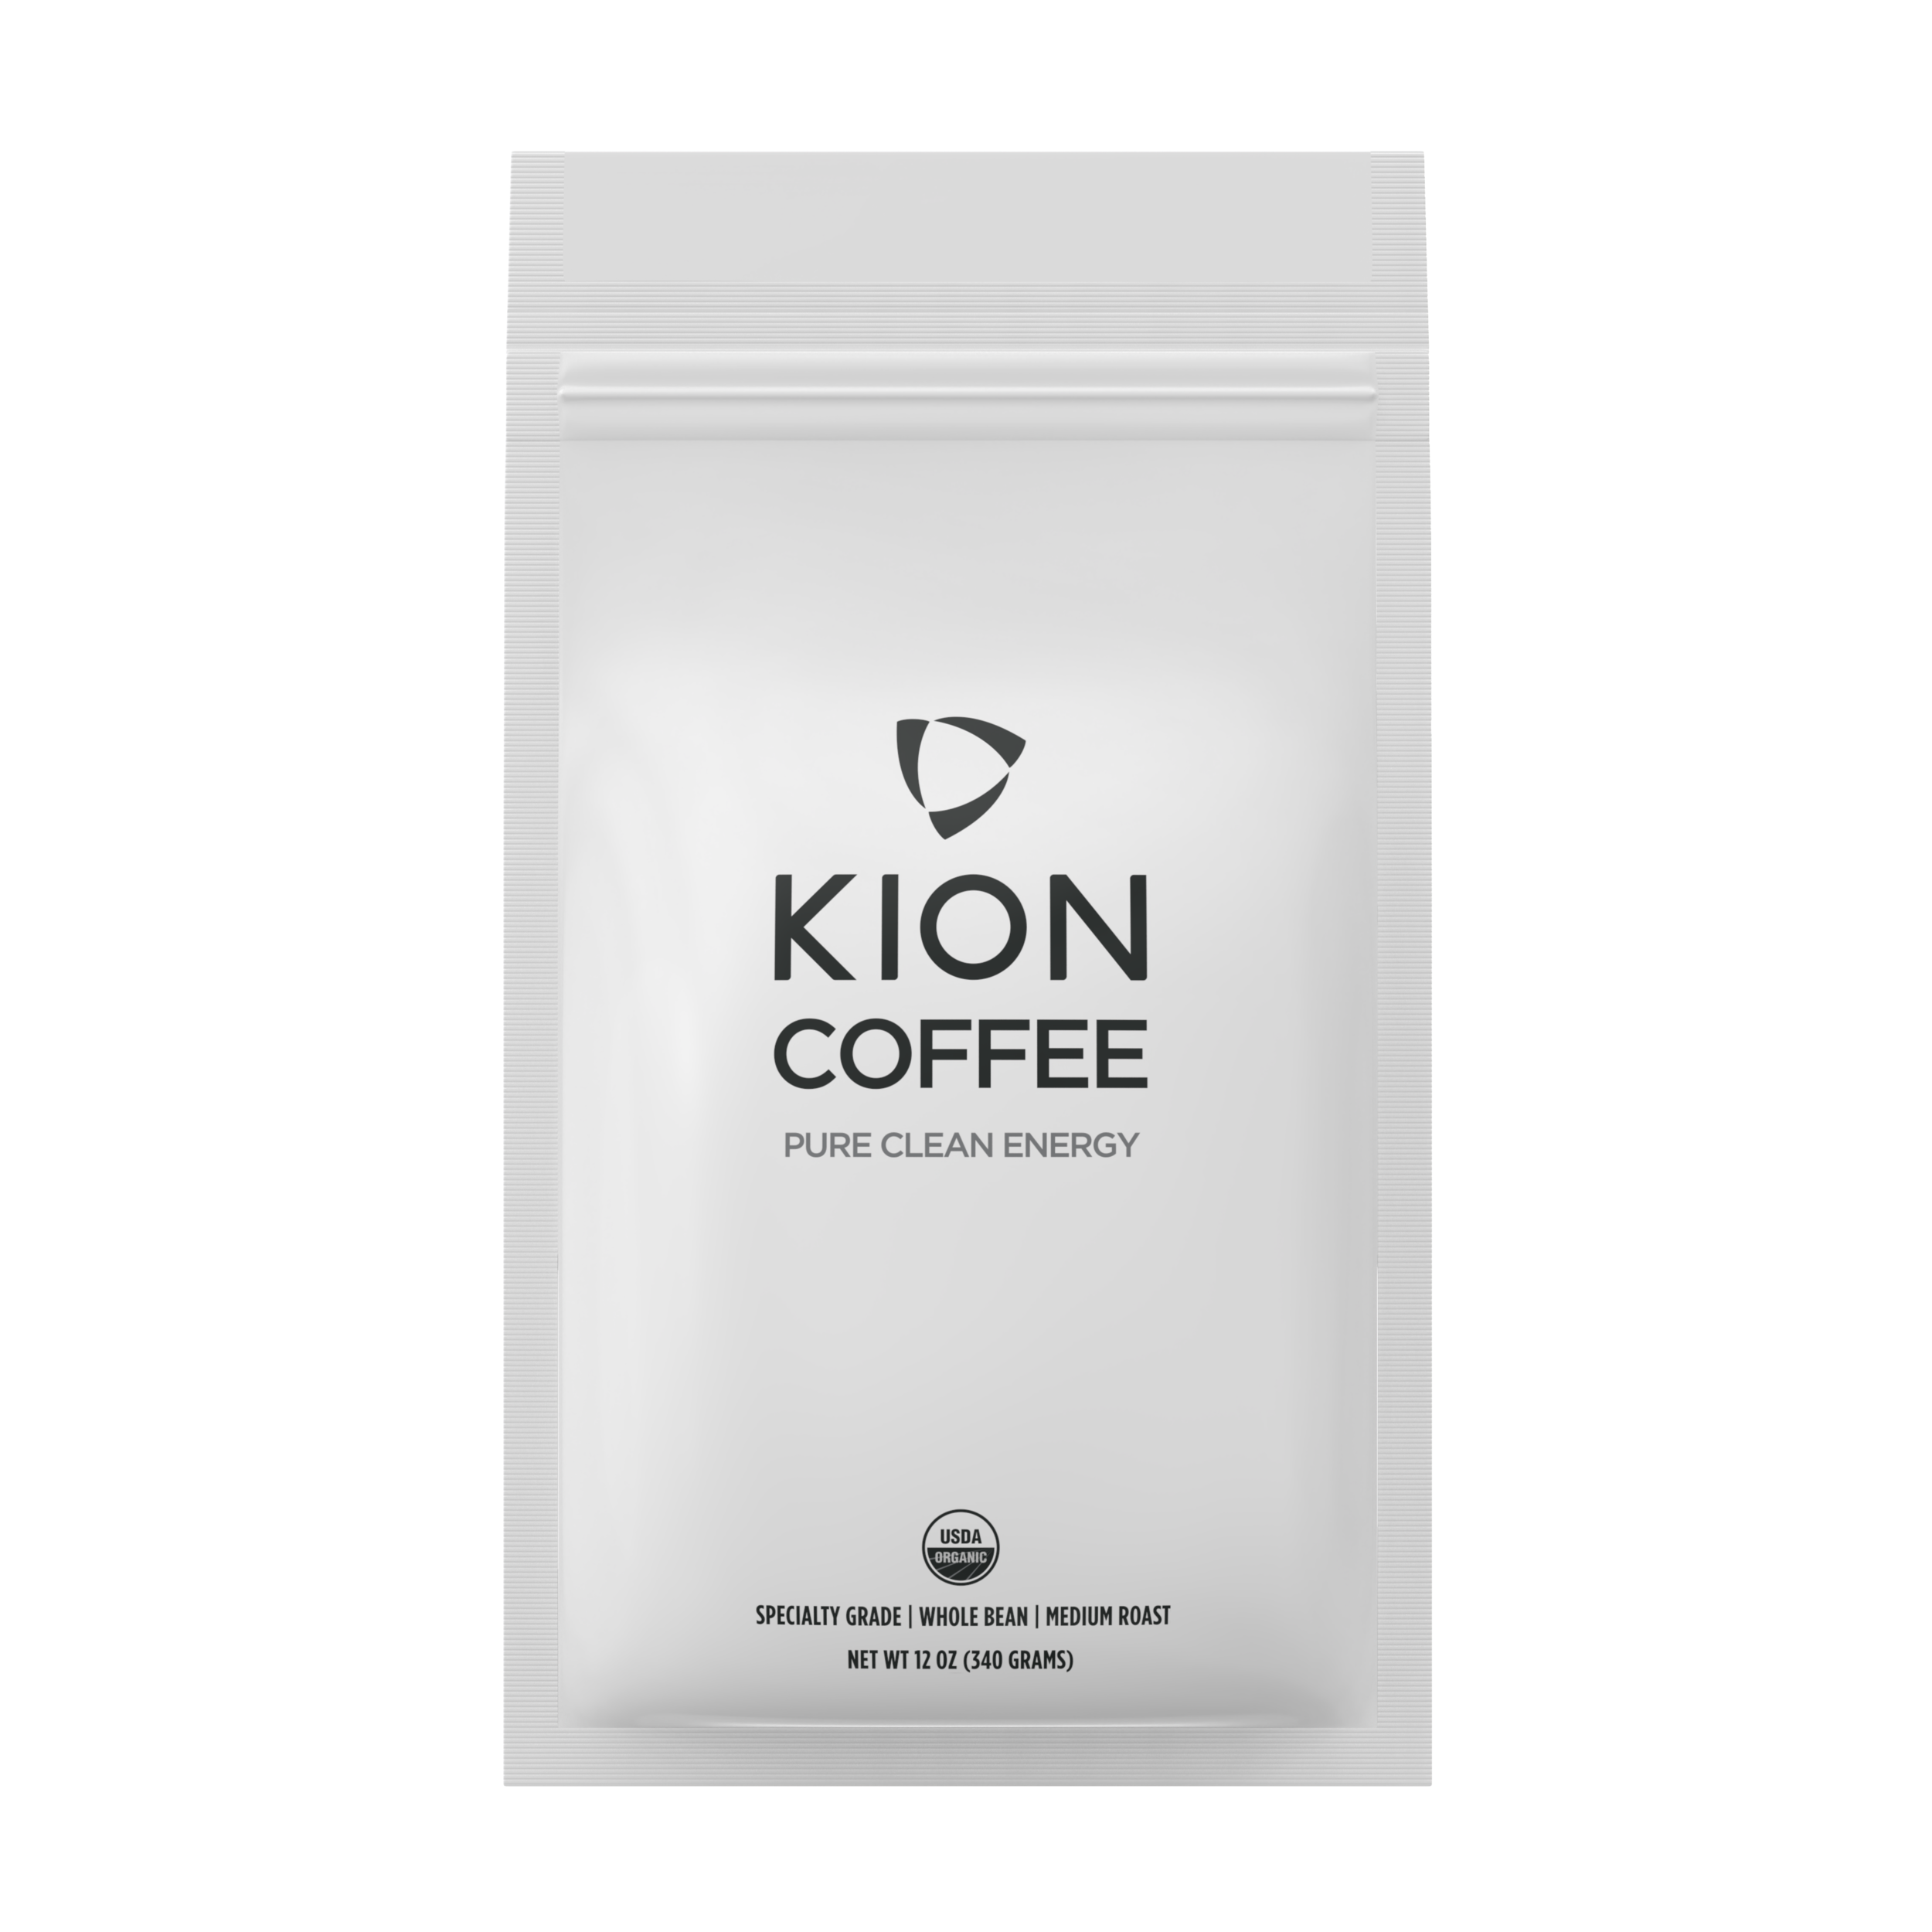 KION // Save 15% with code Sunnyseed